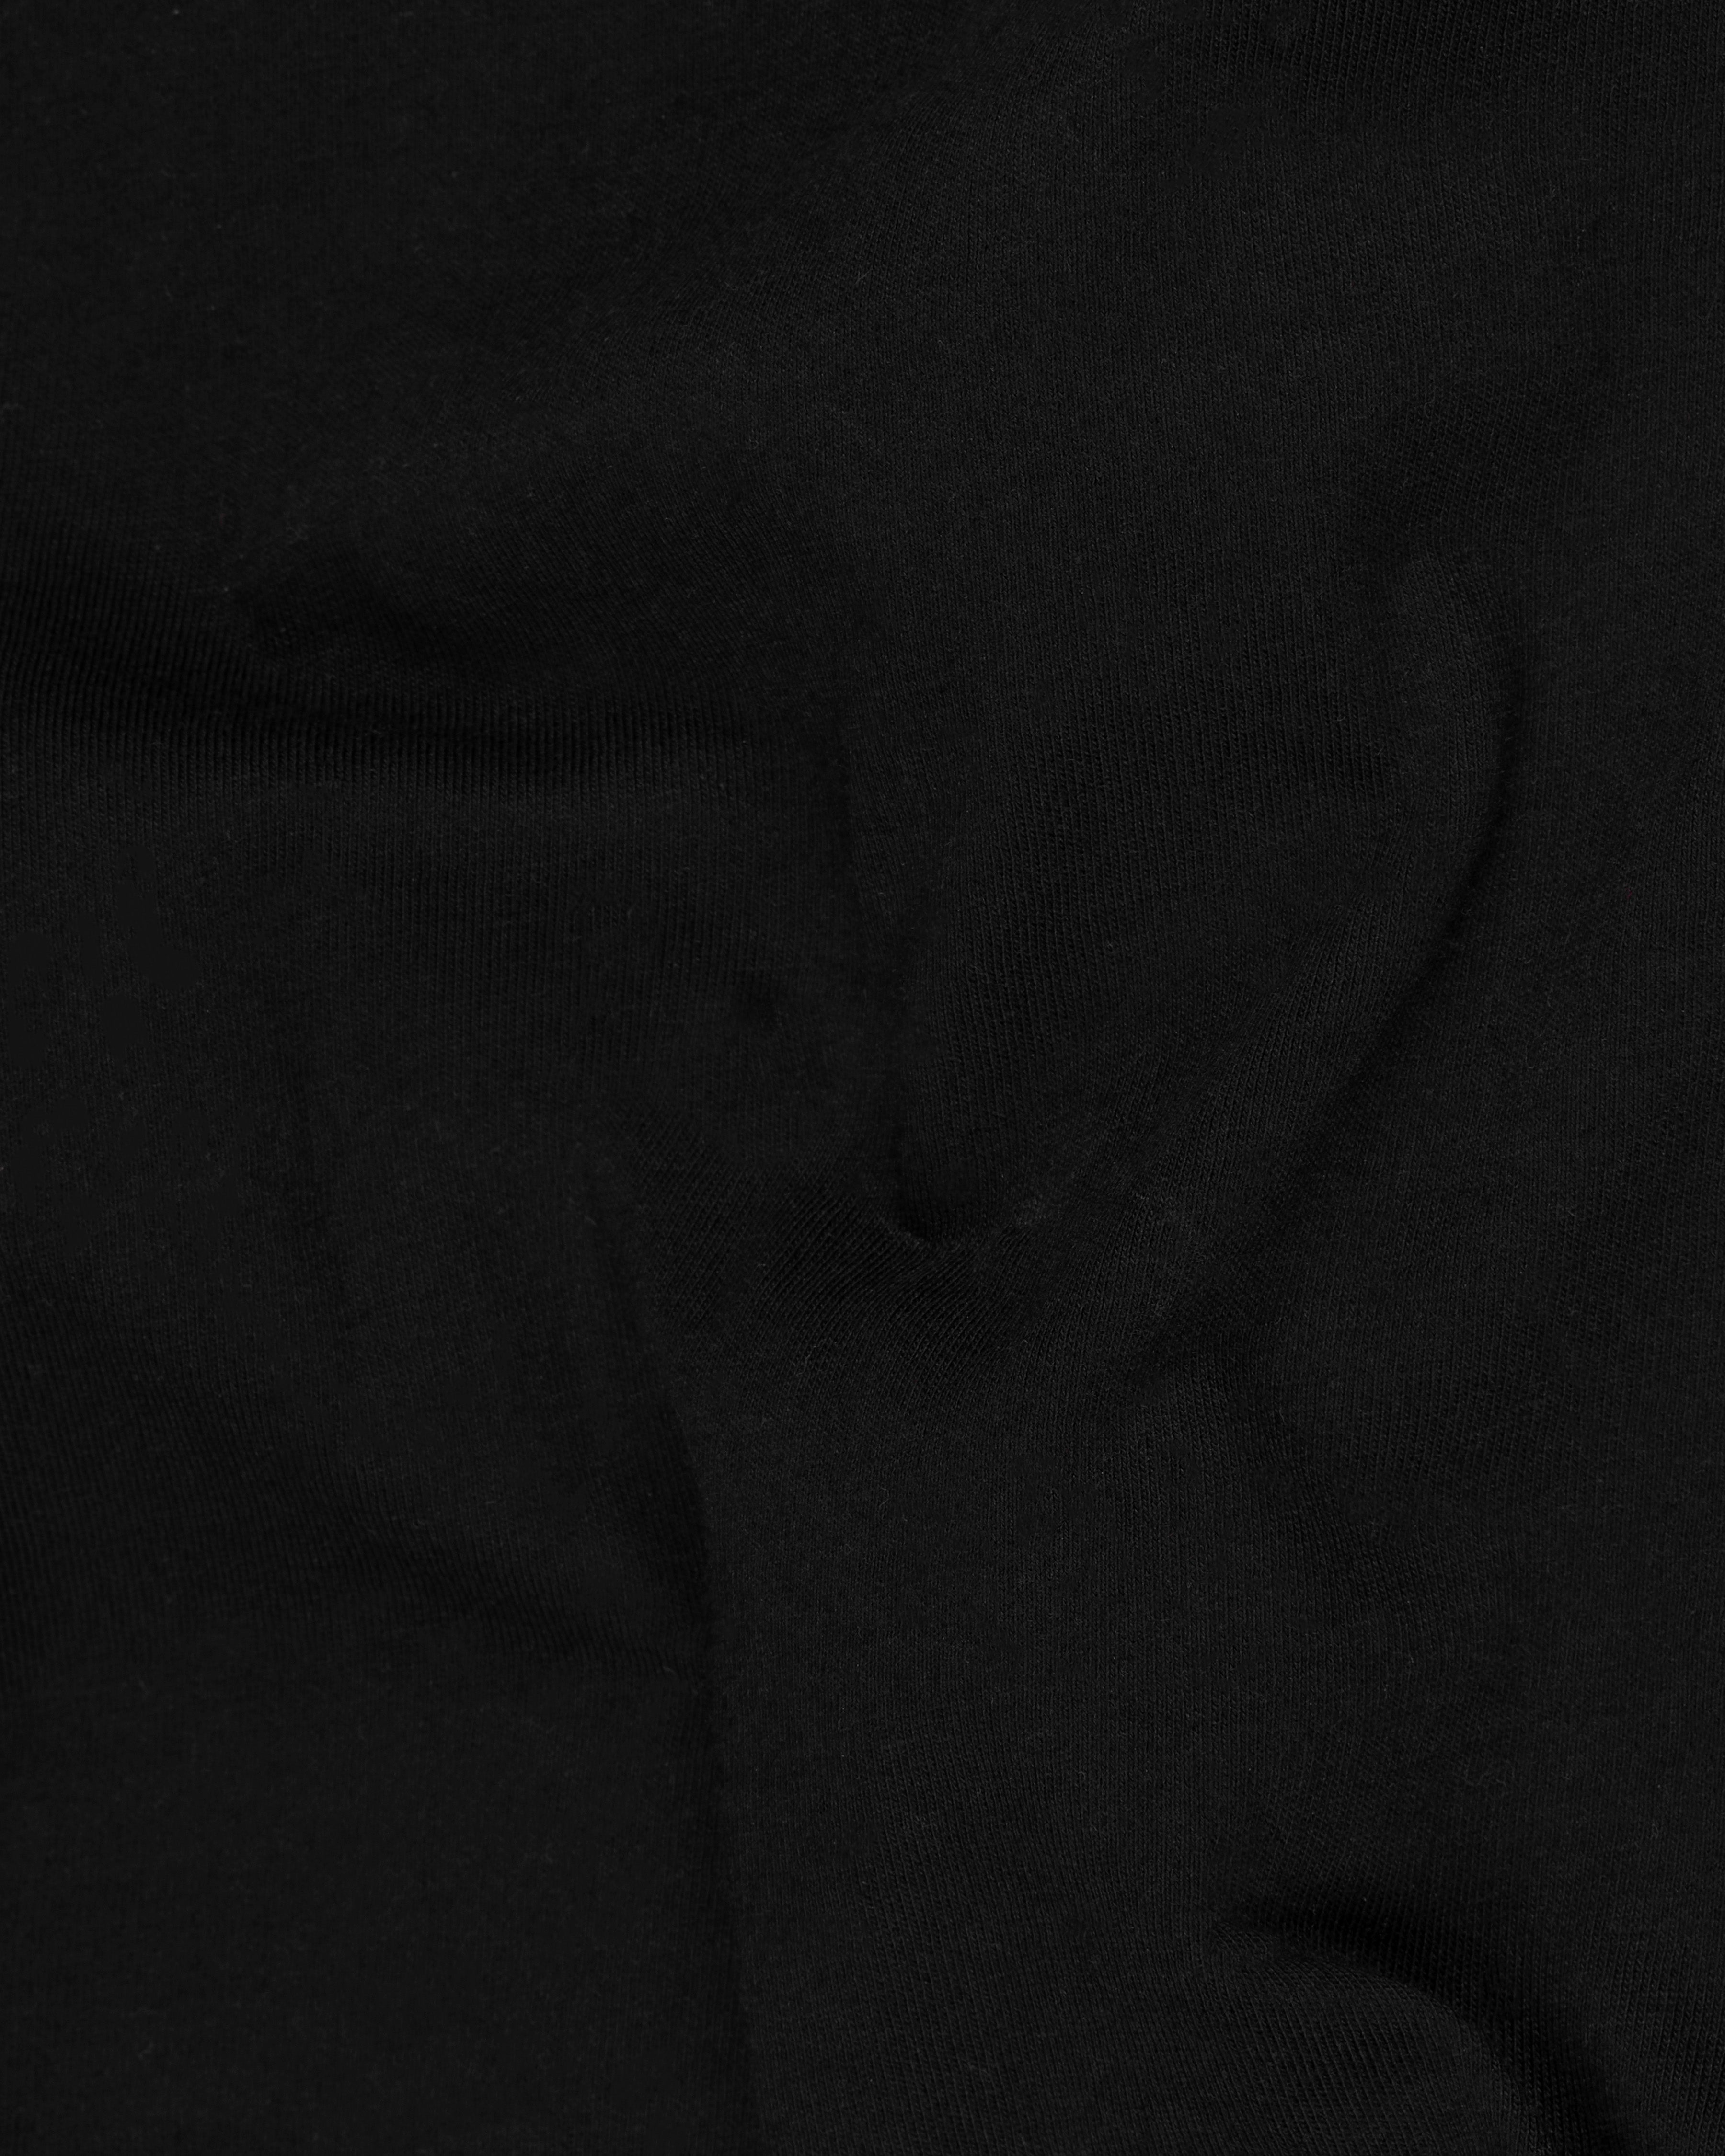 Jade Black Premium Cotton Organic T-shirt TS653-S, TS653-M, TS653-L, TS653-XL, TS653-XXL